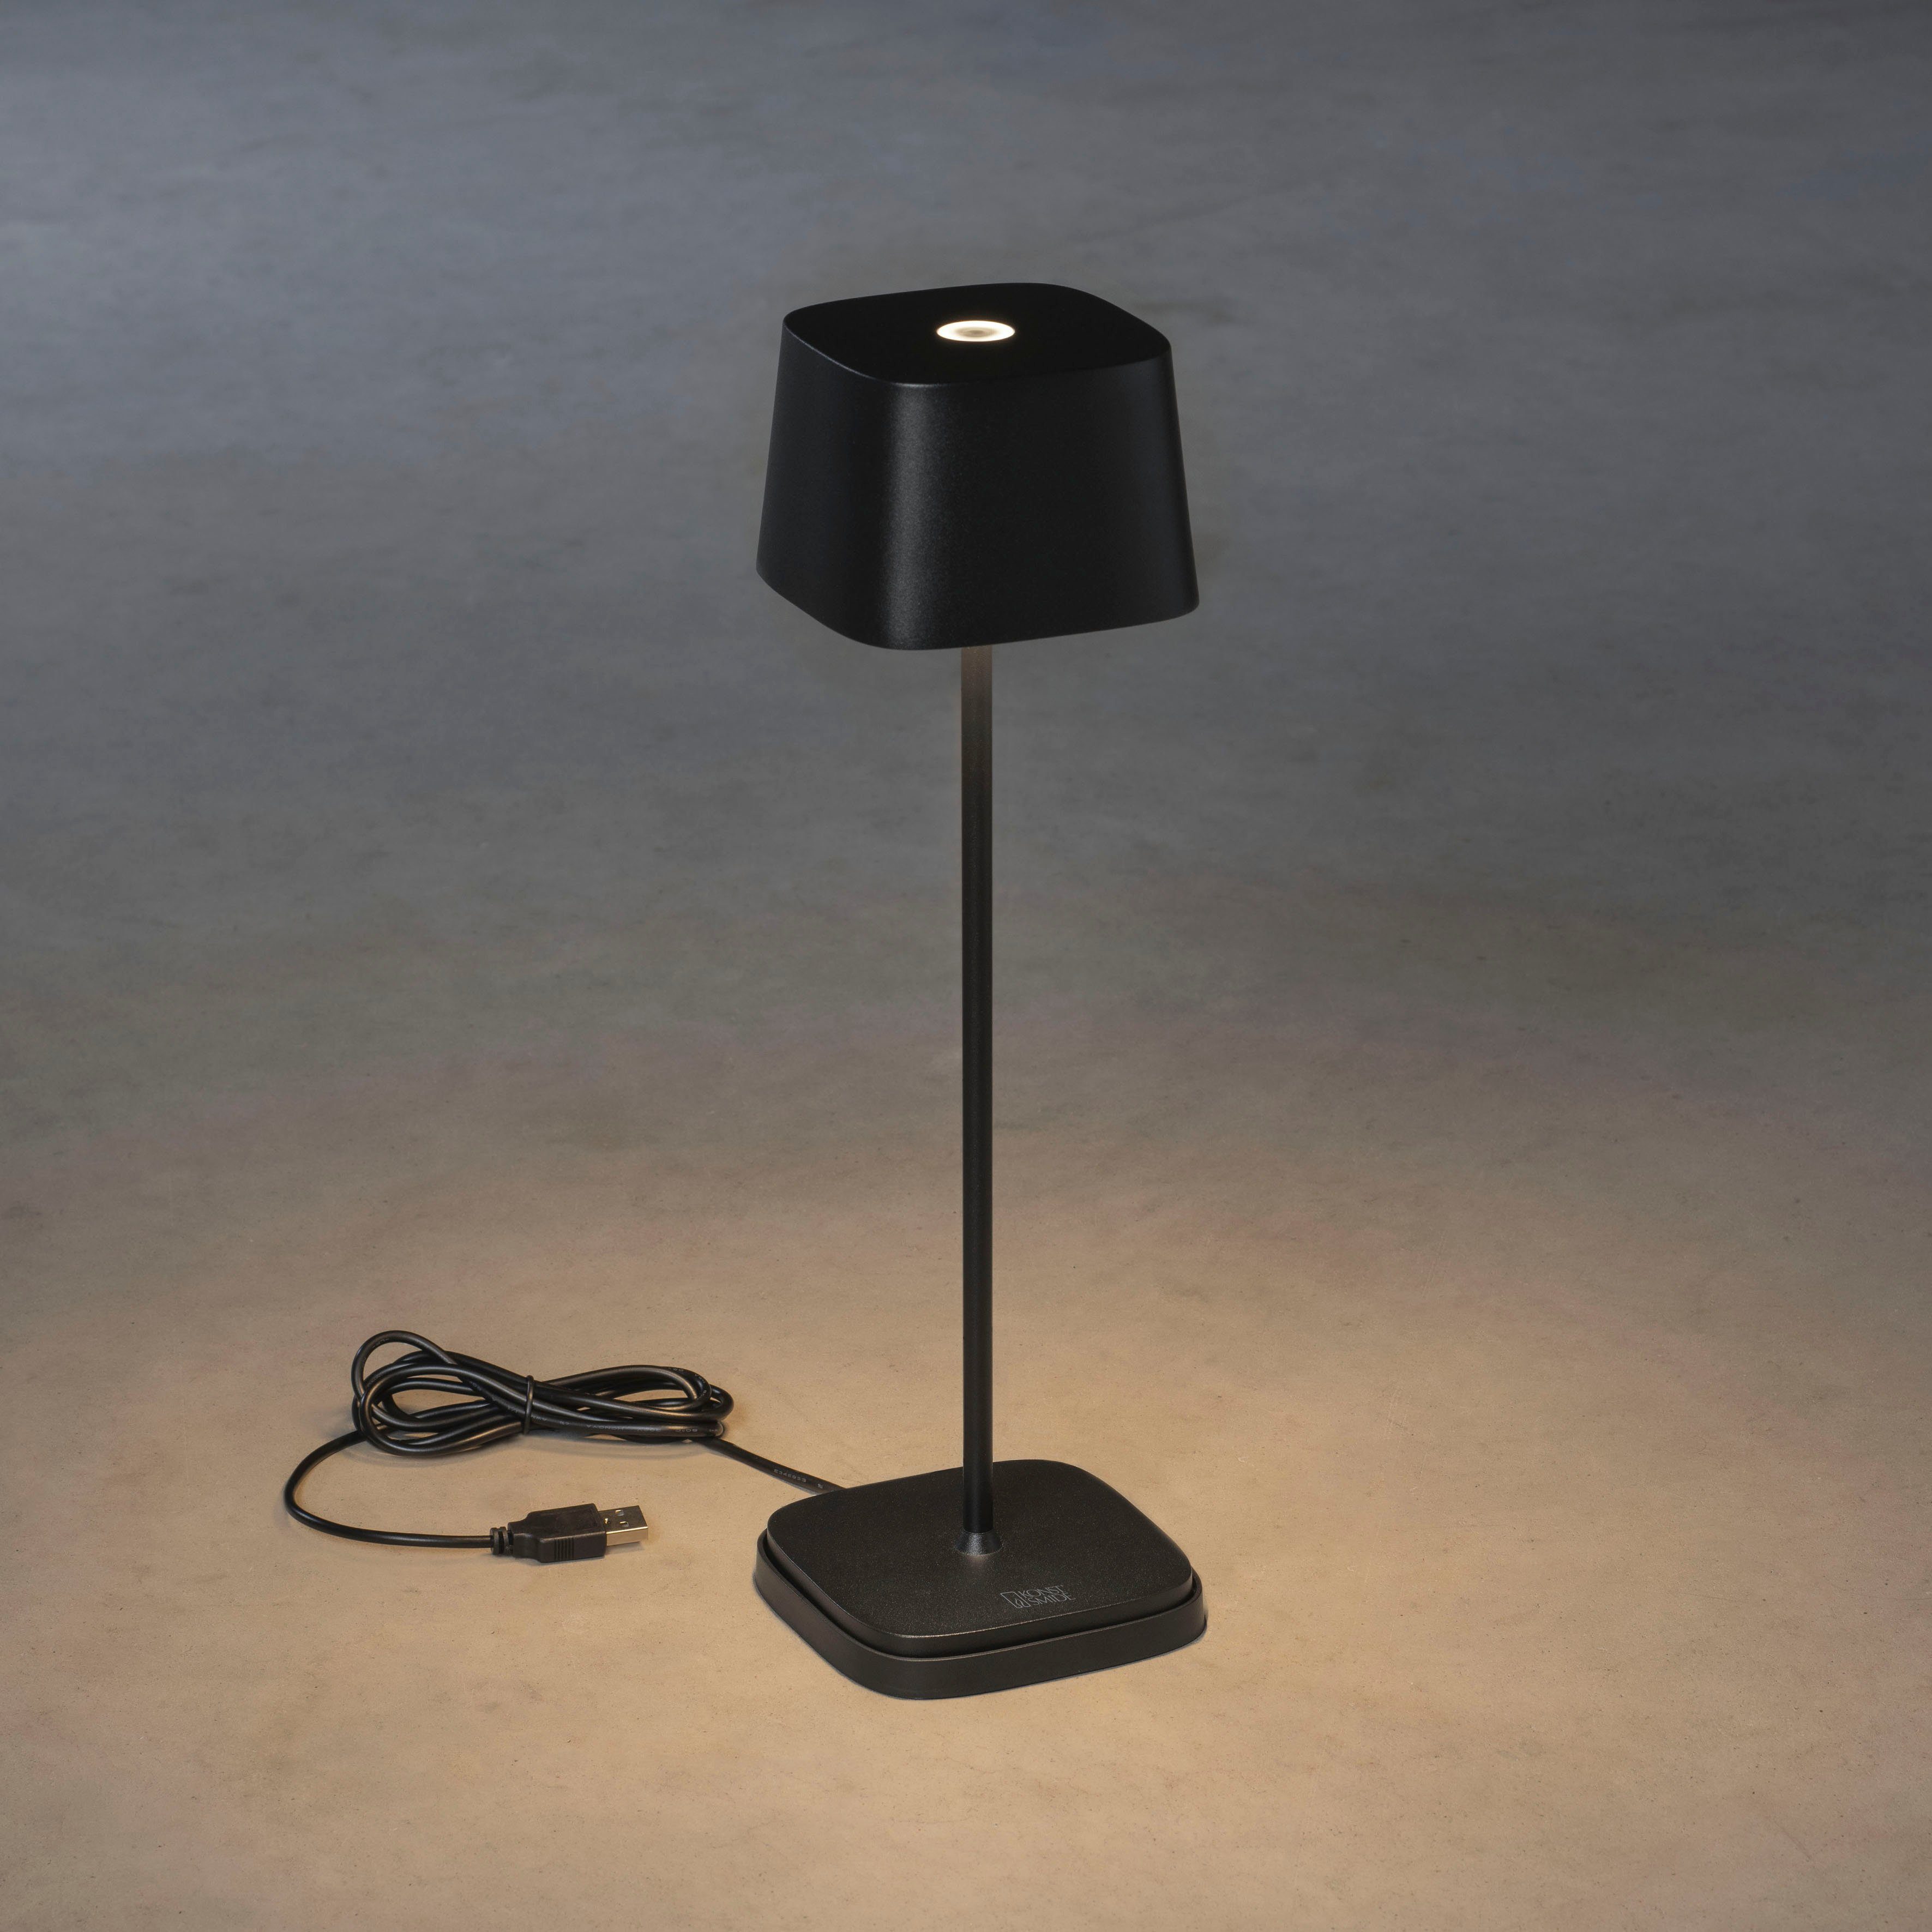 KONSTSMIDE LED Tischleuchte fest Warmweiß, LED Farbtemperatur, schwarz, Capri Capri, LED dimmba USB-Tischleuchte integriert